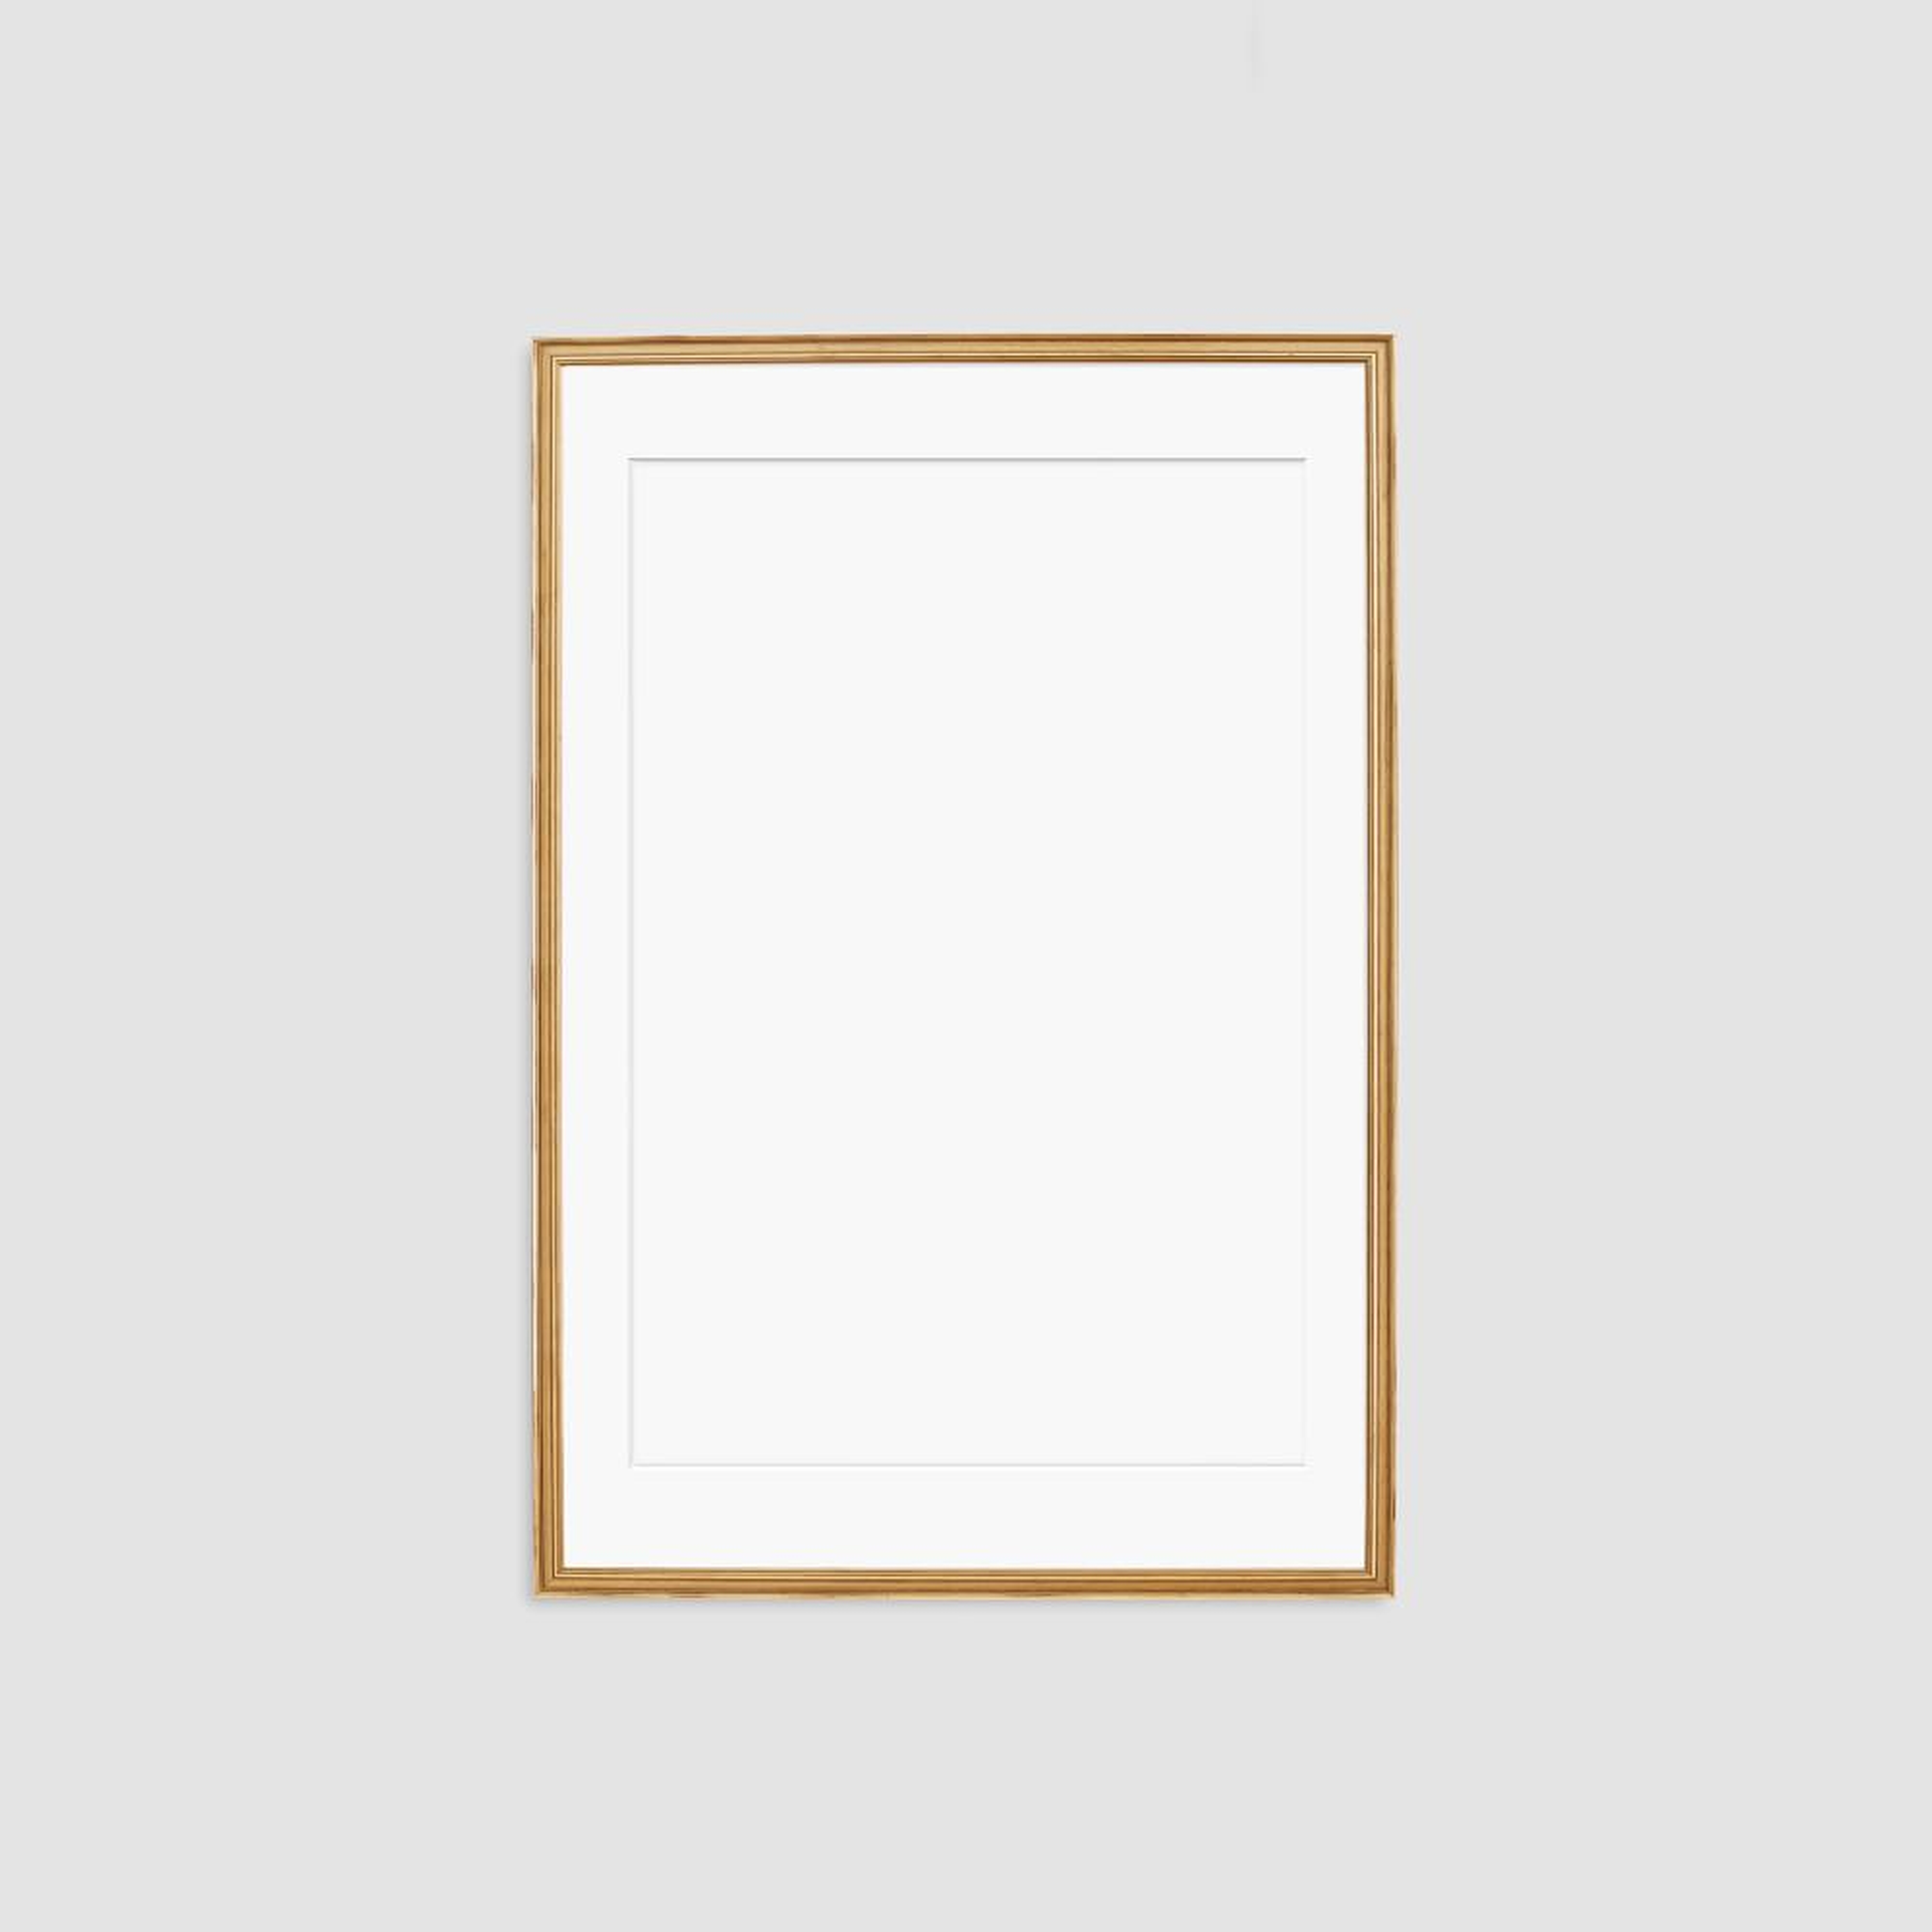 Simply Framed Oversized Gallery Frame – Antique Gold/Mat / 24"X36" - West Elm